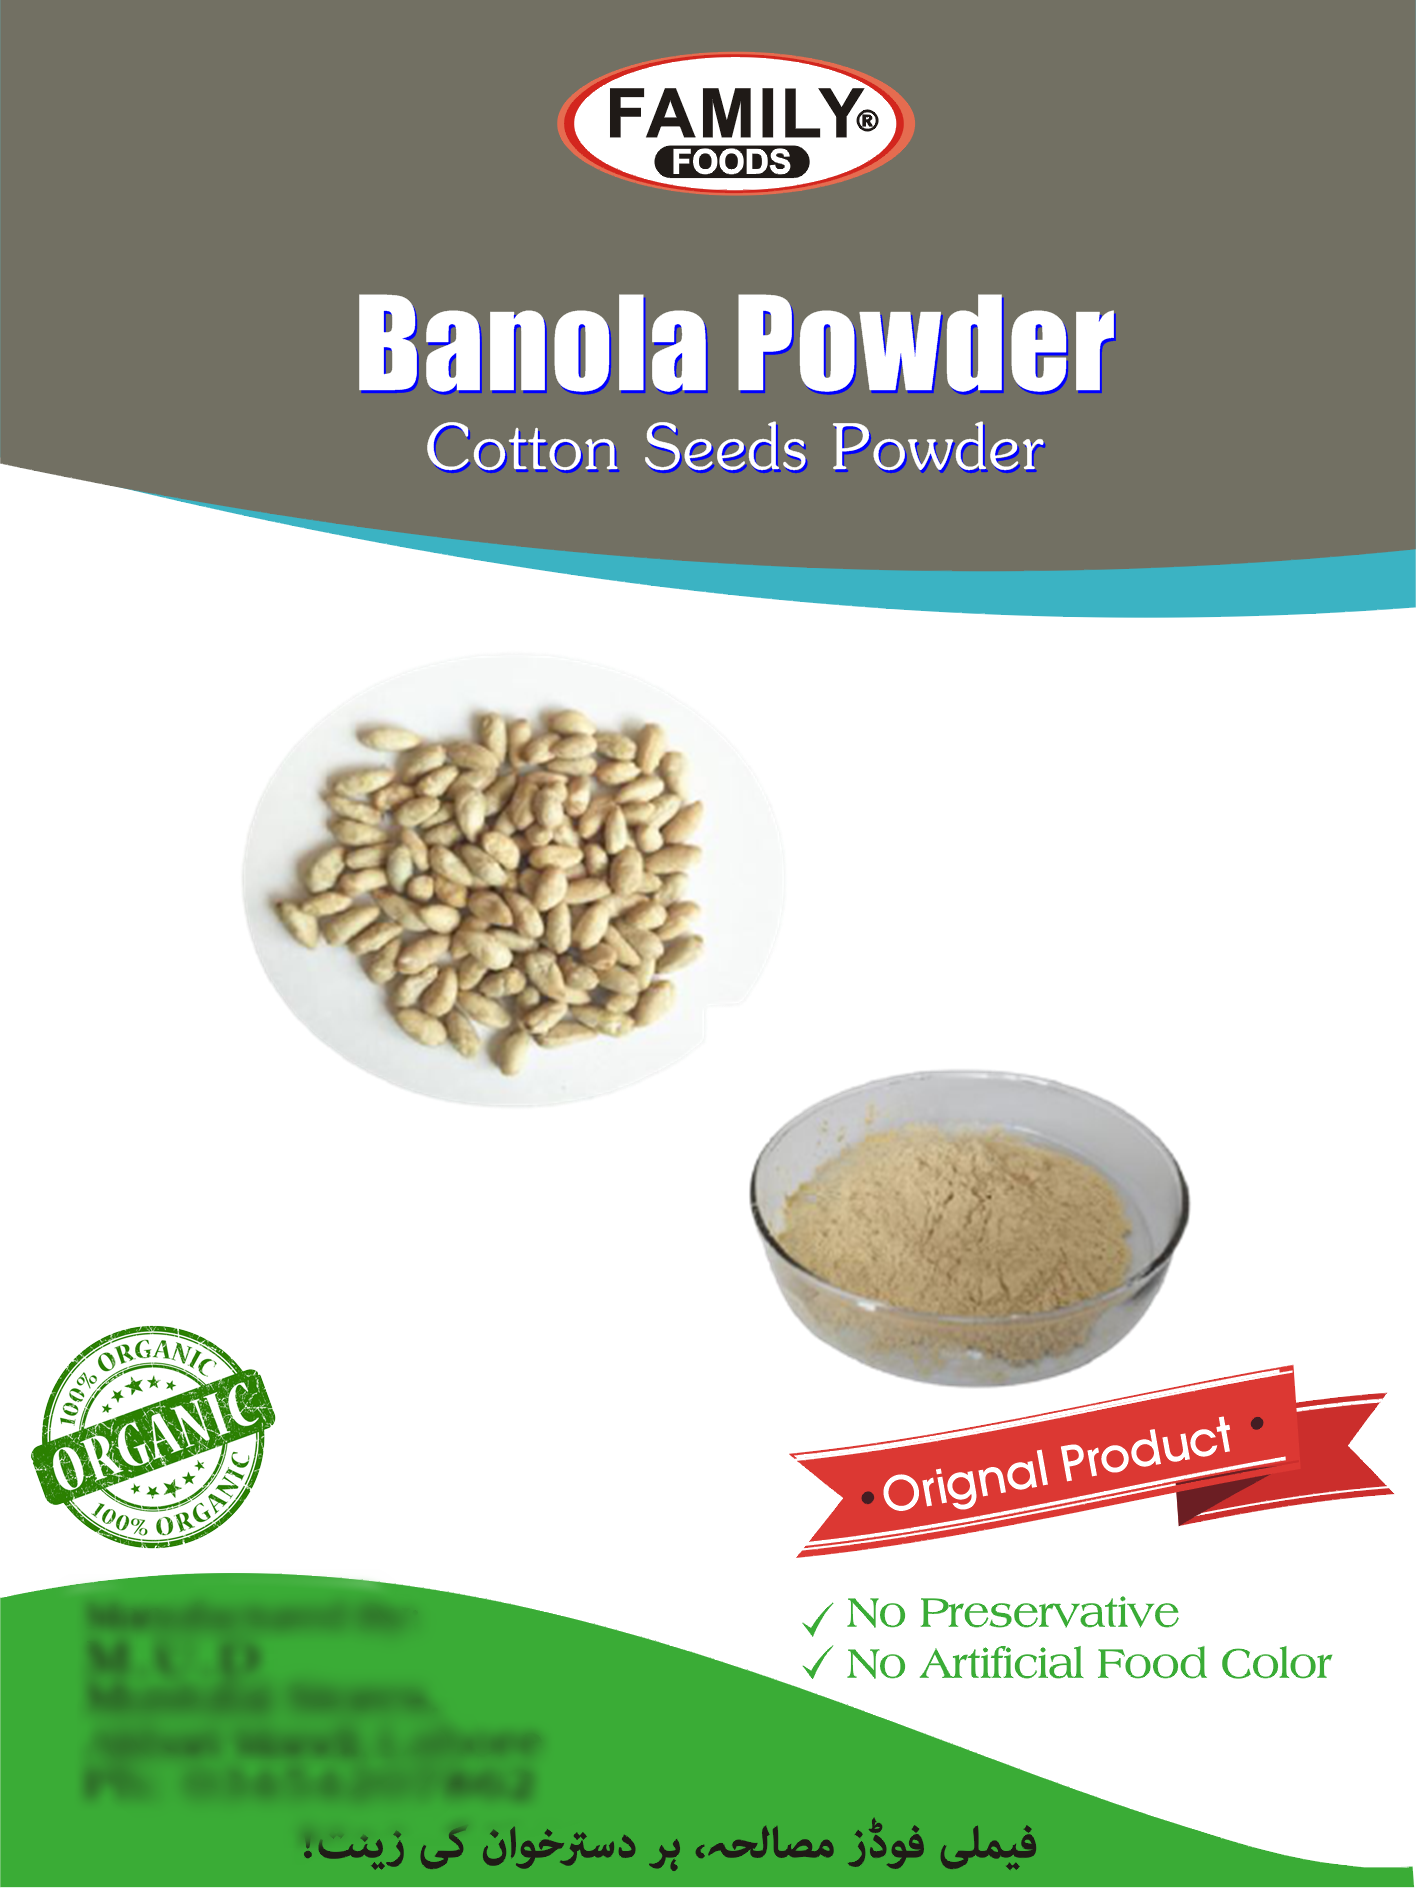 Banola Seeds Powder - Cotton Seeds Powder.